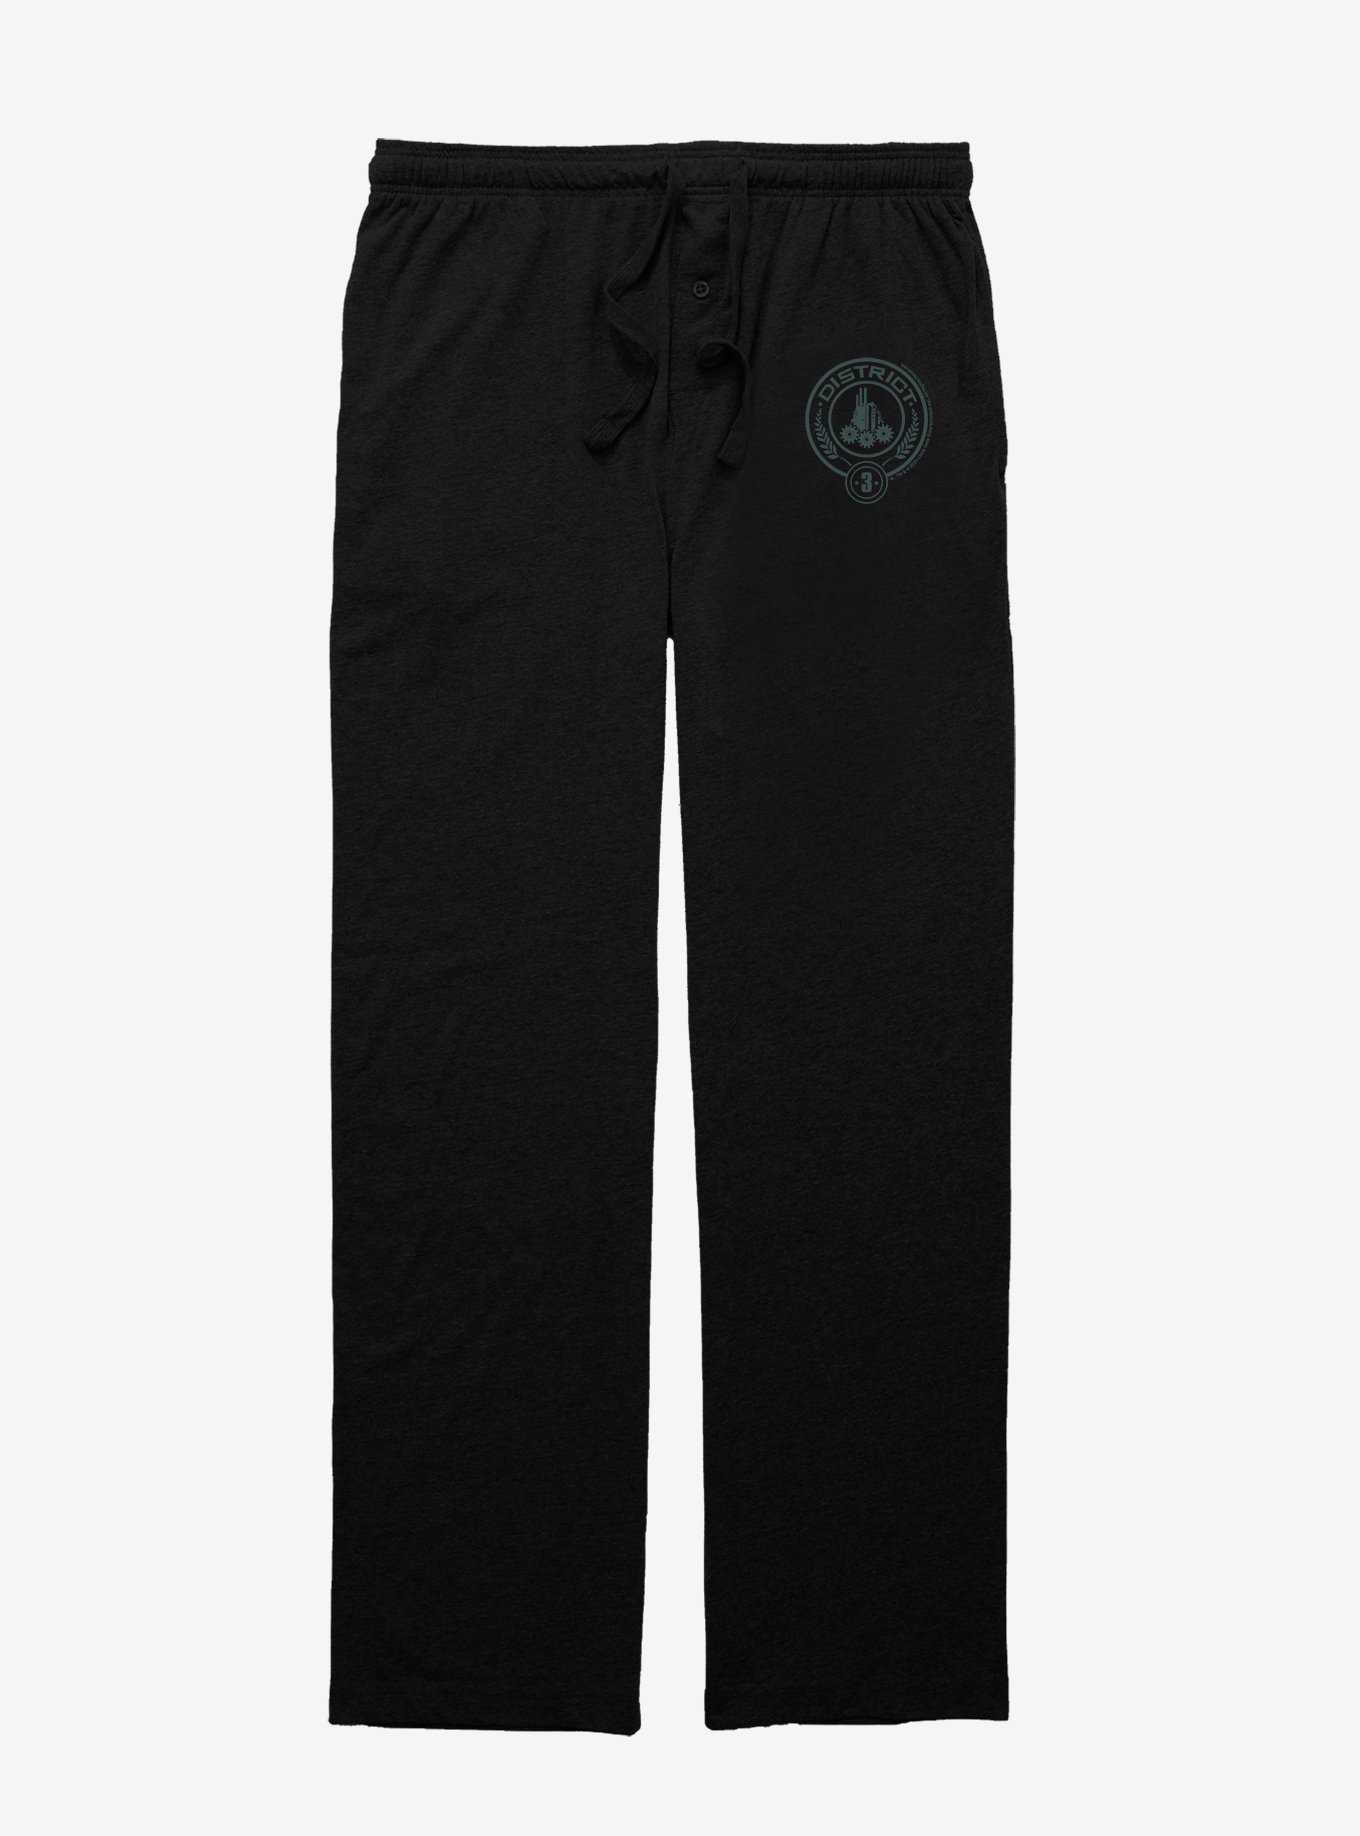 Hunger Games District 3 Emblem Pajama Pants, , hi-res